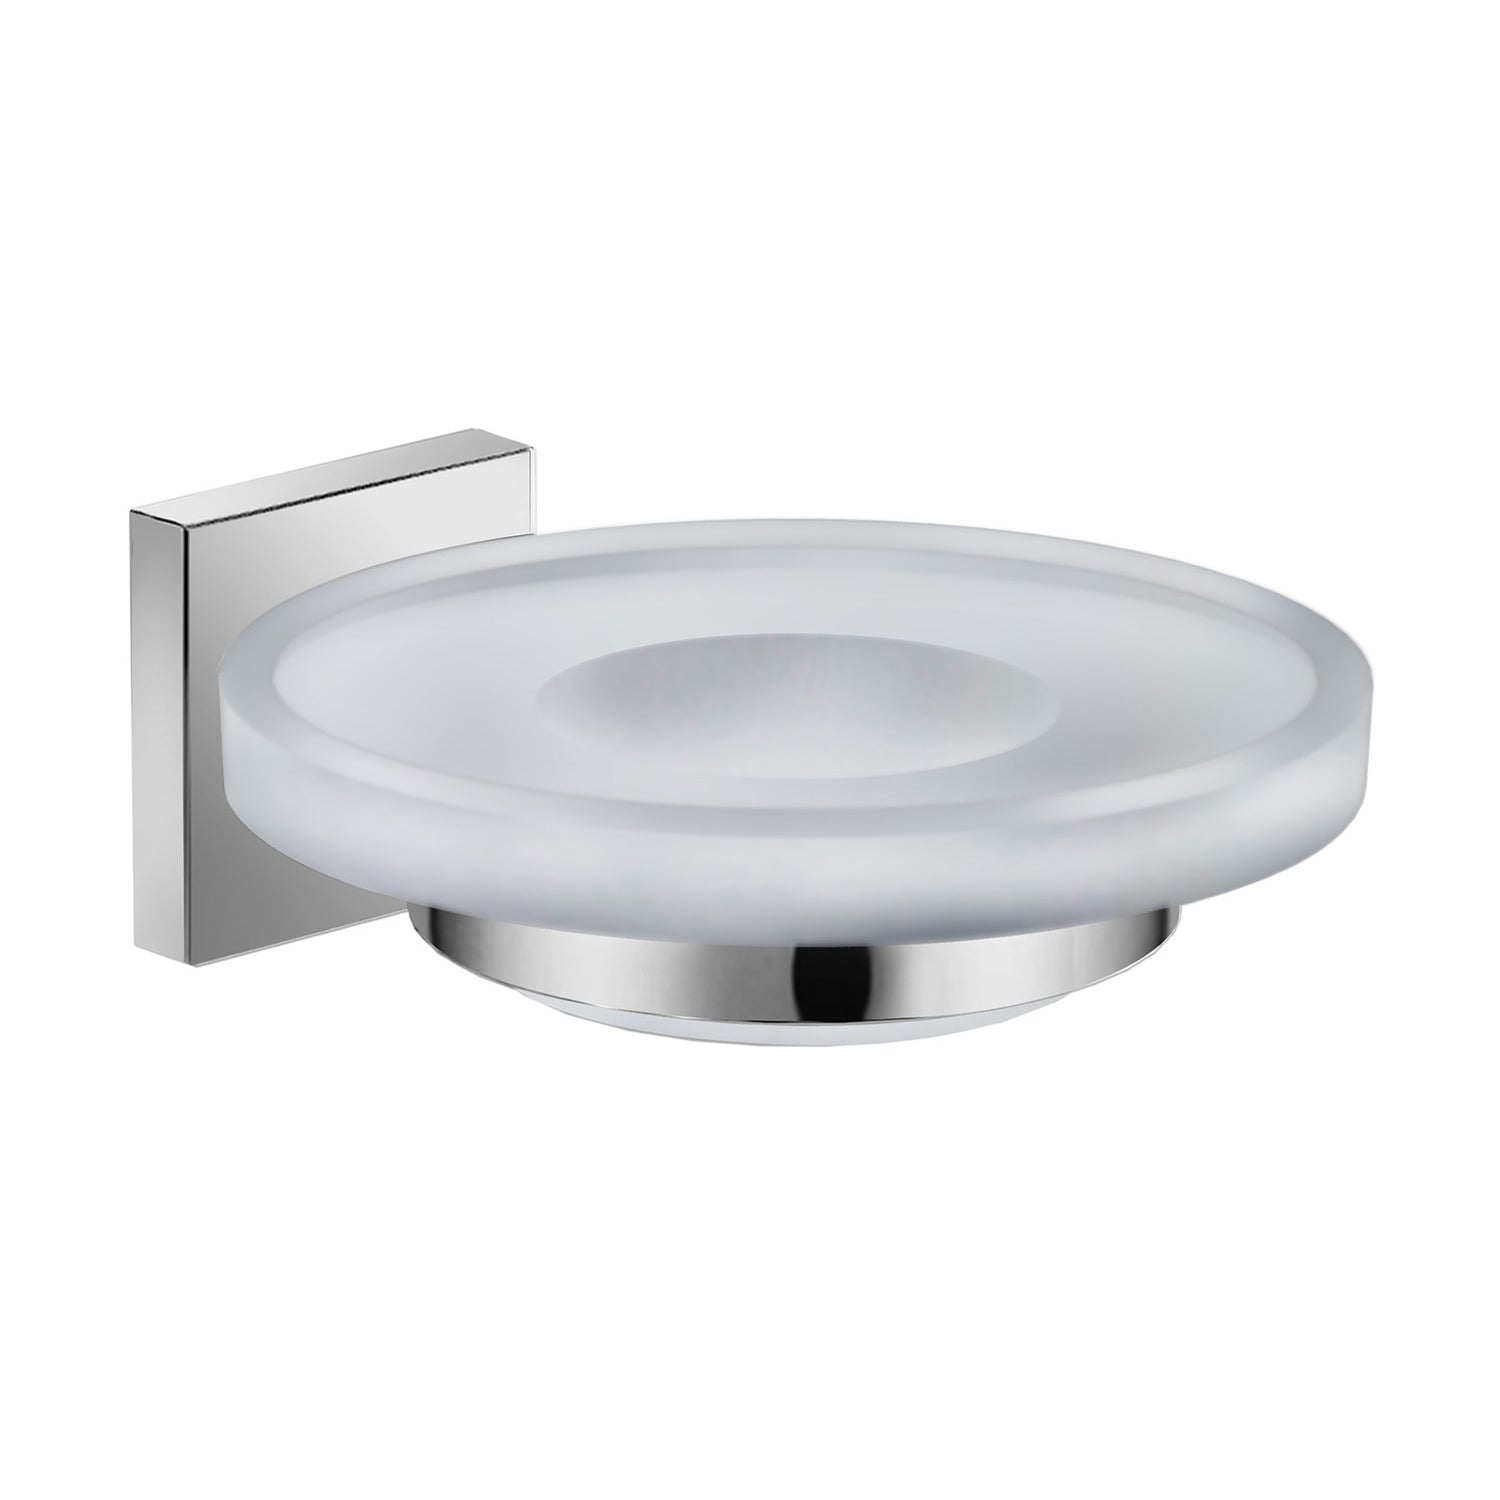 DAX Milano Soap Dish, Tray, Wall Mount, Clear Glass, 4-5/16 x 5 x 1-3/4 Inches (DAX-GDC160132)